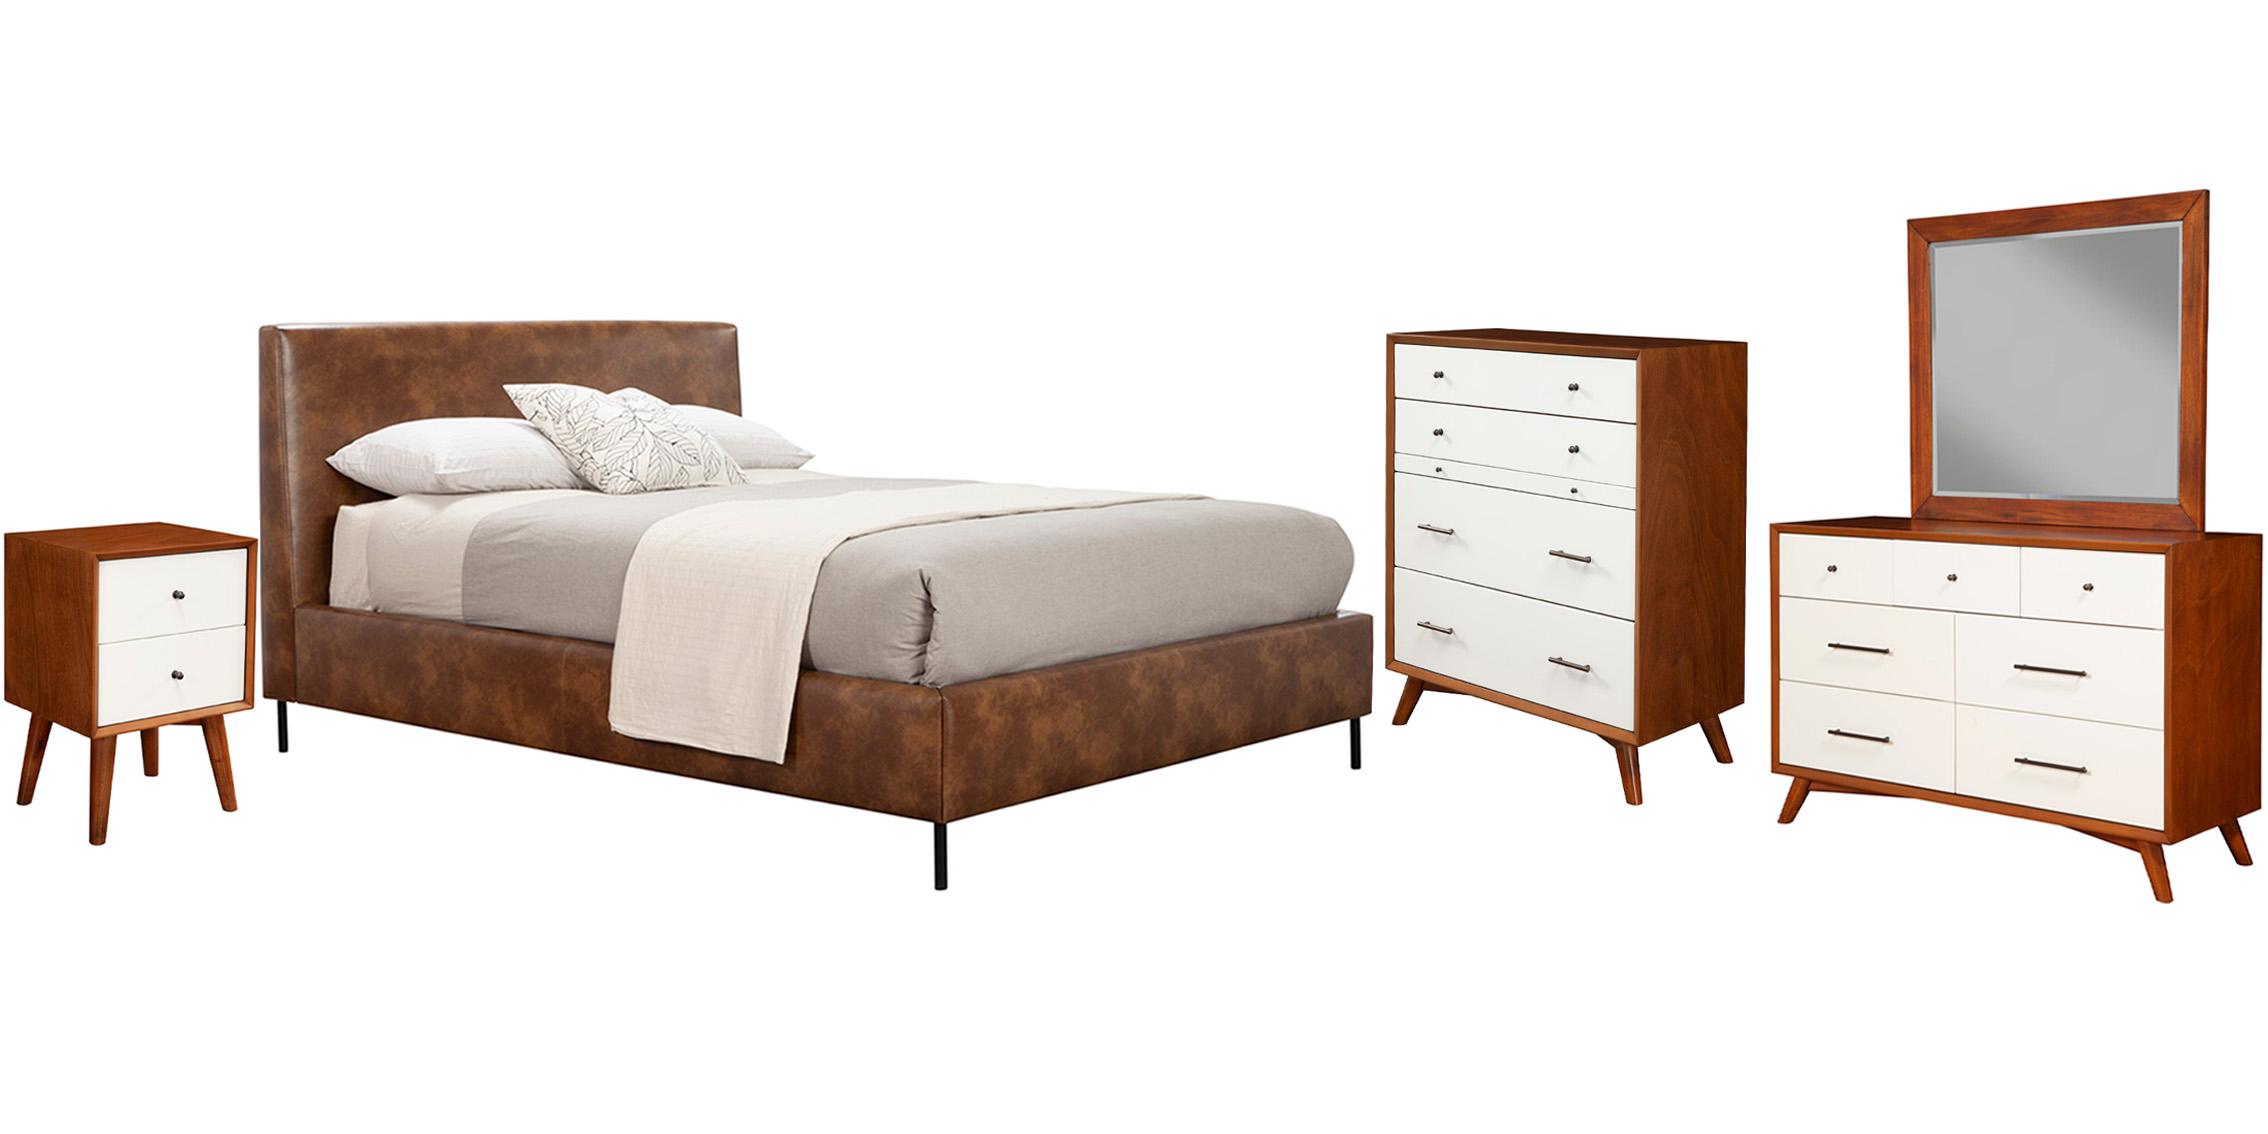 Modern, Rustic Platform Bedroom Set SOPHIA/FLYNN 6902Q-BRN-Set-5 in Brown Faux Leather